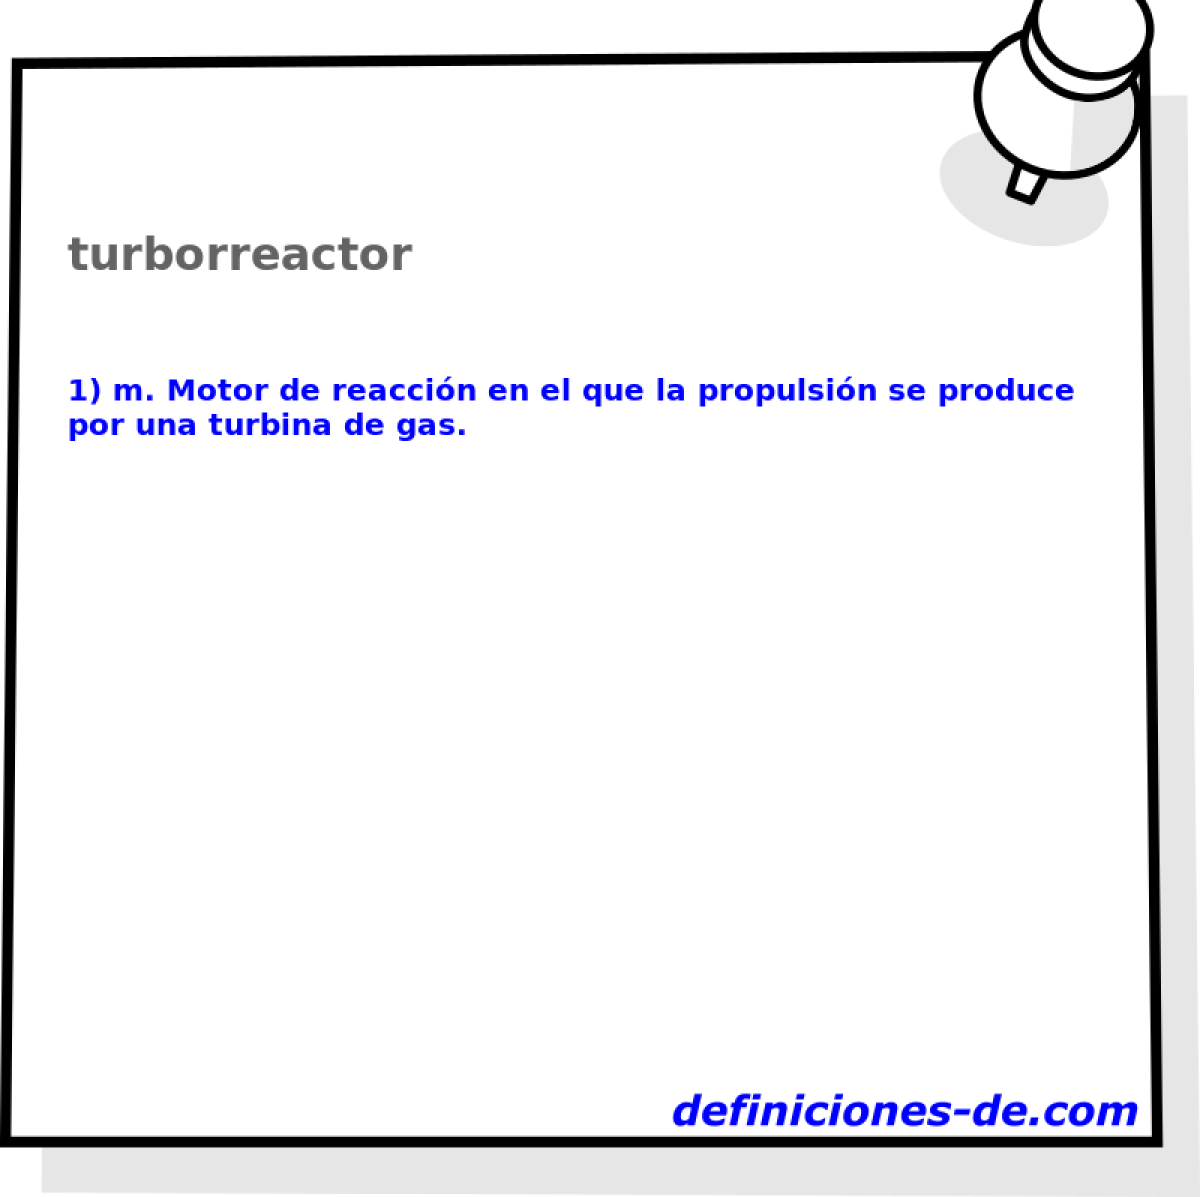 turborreactor 